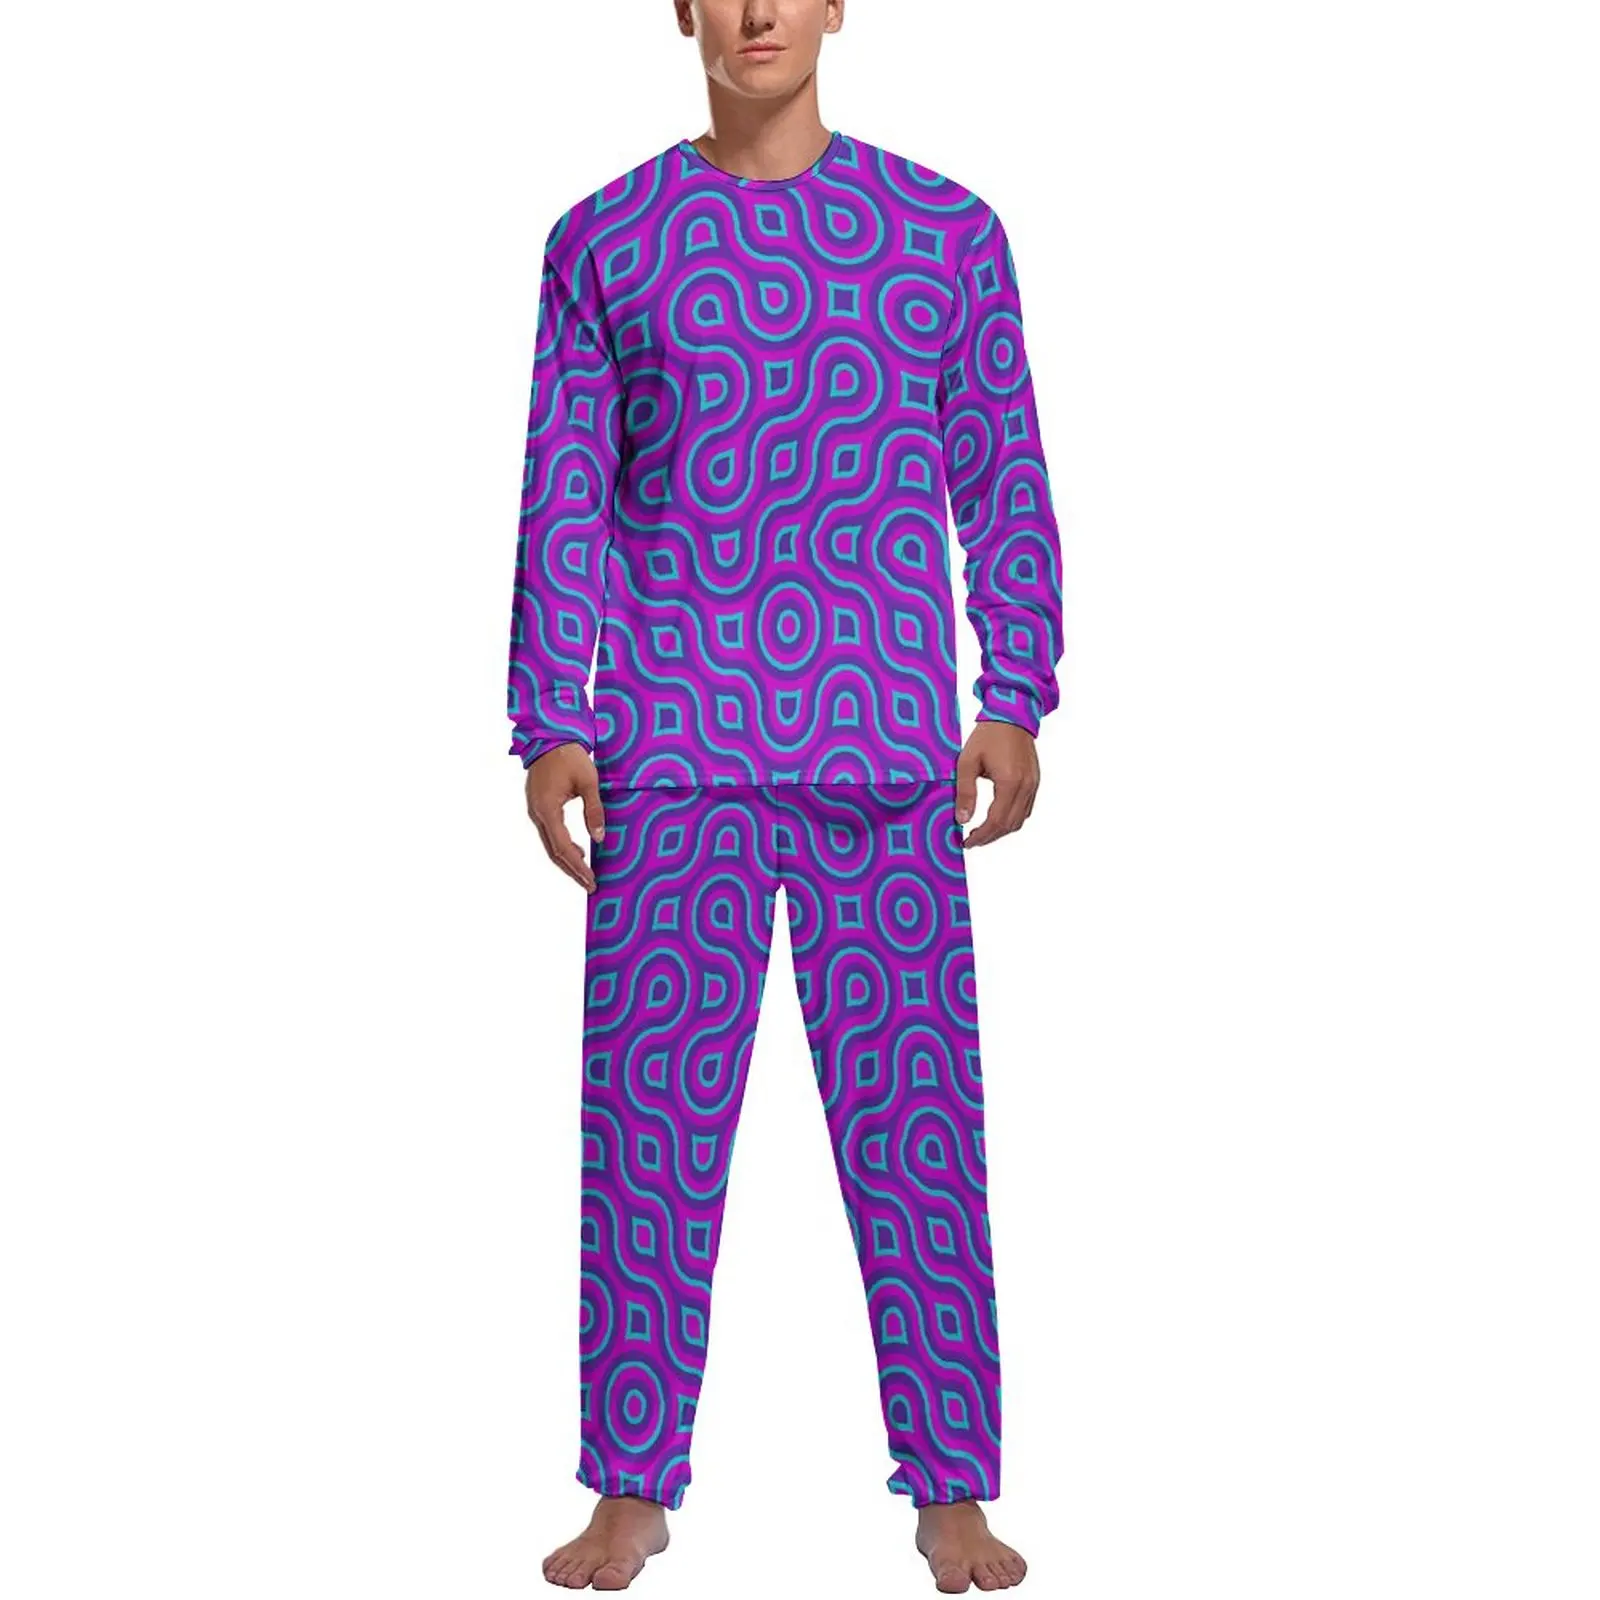 

Retro Mod Pajamas Long Sleeves Modern Abstract Two Piece Casual Pajama Sets Spring Man Graphic Cute Nightwear